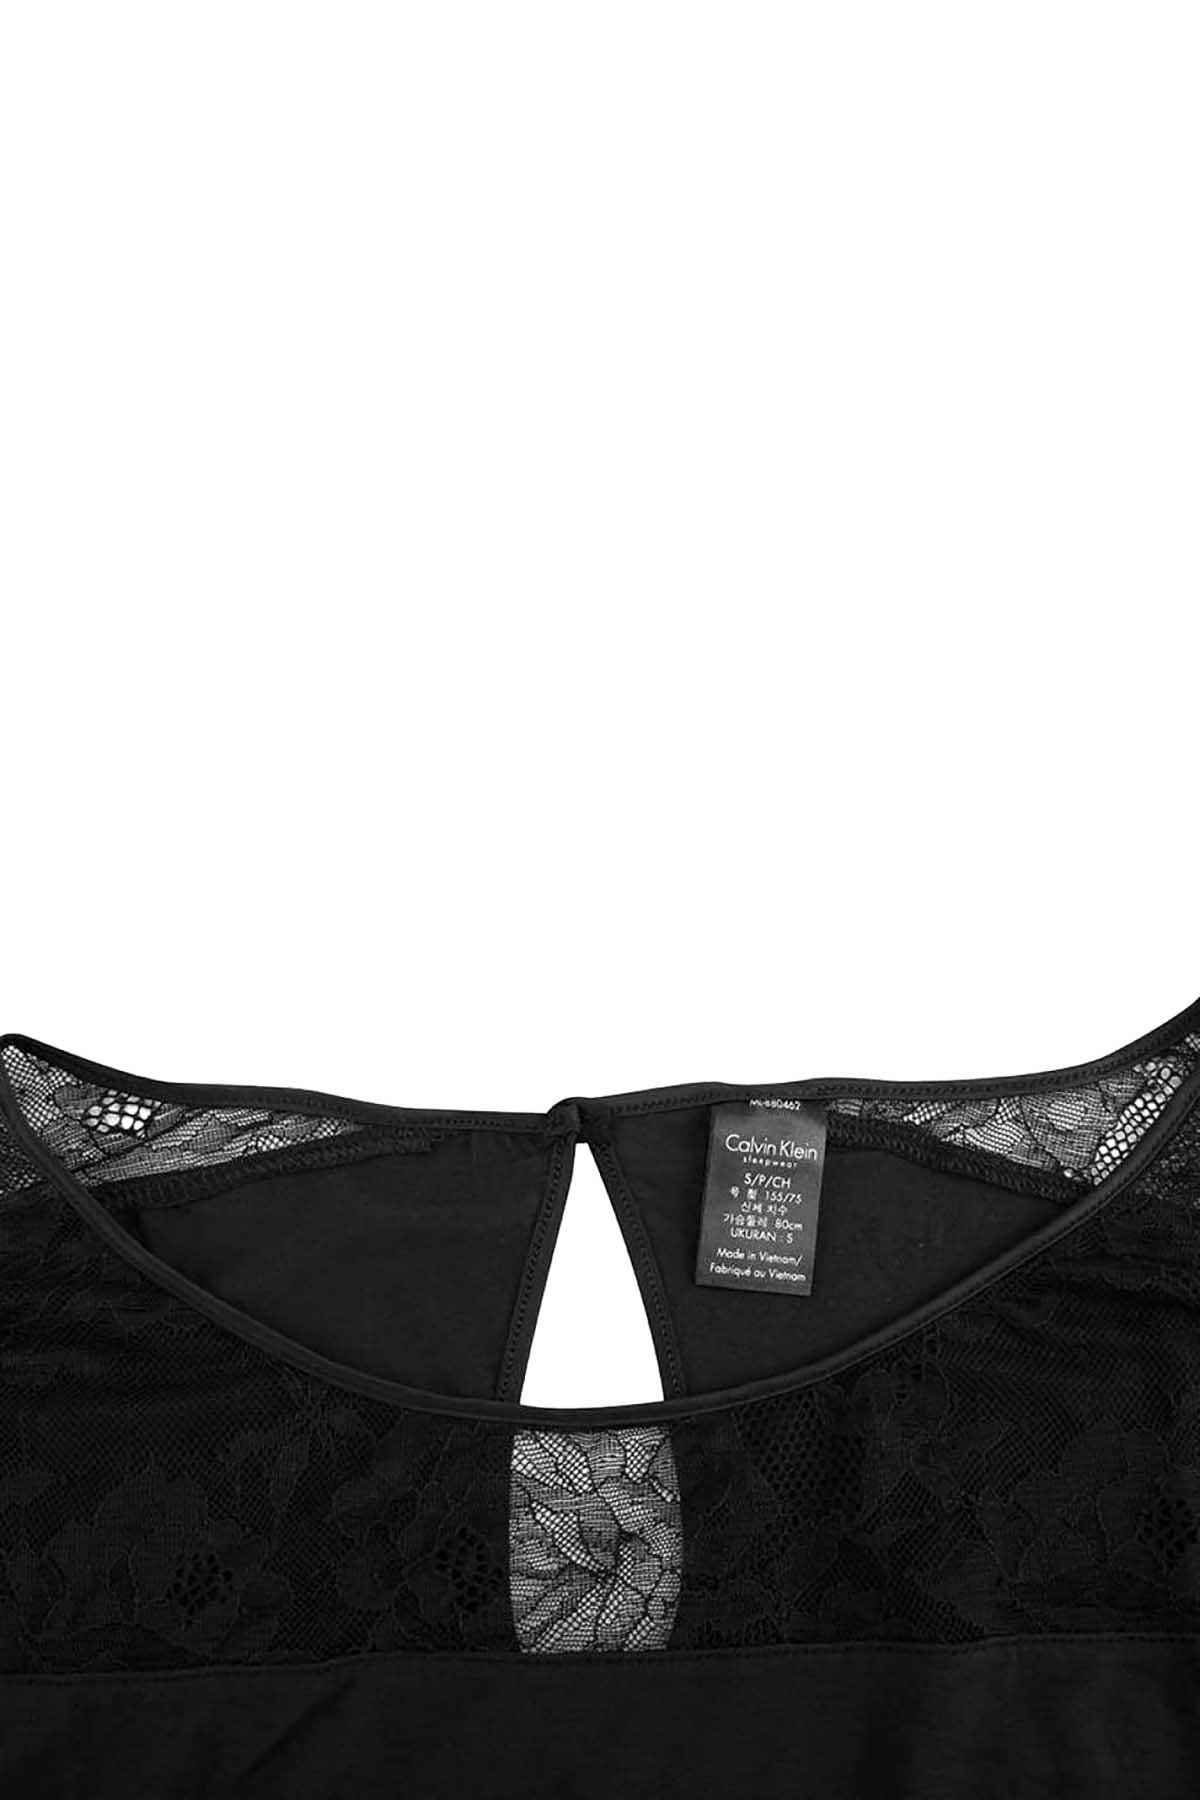 Calvin Klein Sleepwear Black Decadence Wide-Neck Modal Top